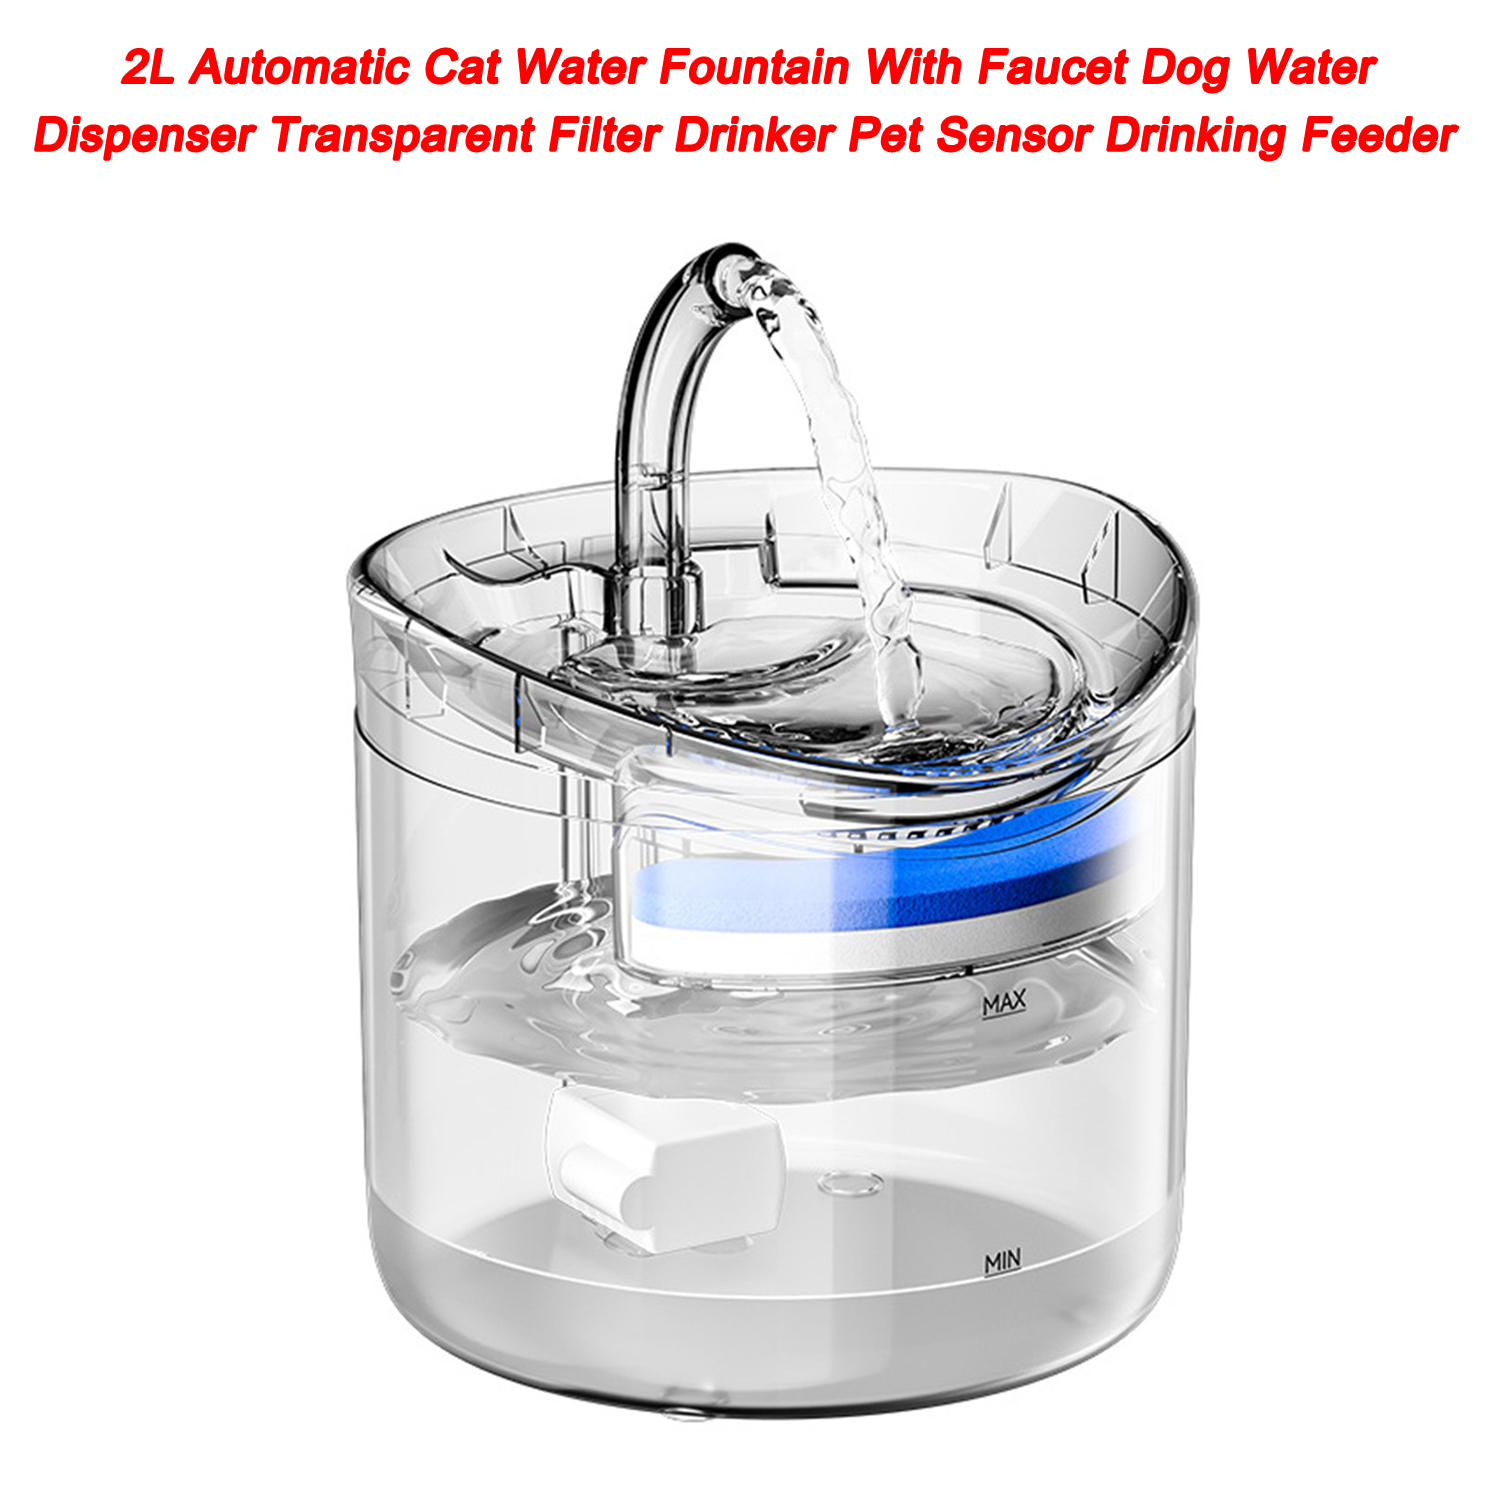 Fuente de agua automática para gatos de 2L con grifo, dispensador de agua para perros, filtro transparente, bebedero con Sensor para mascotas, alimentador para beber